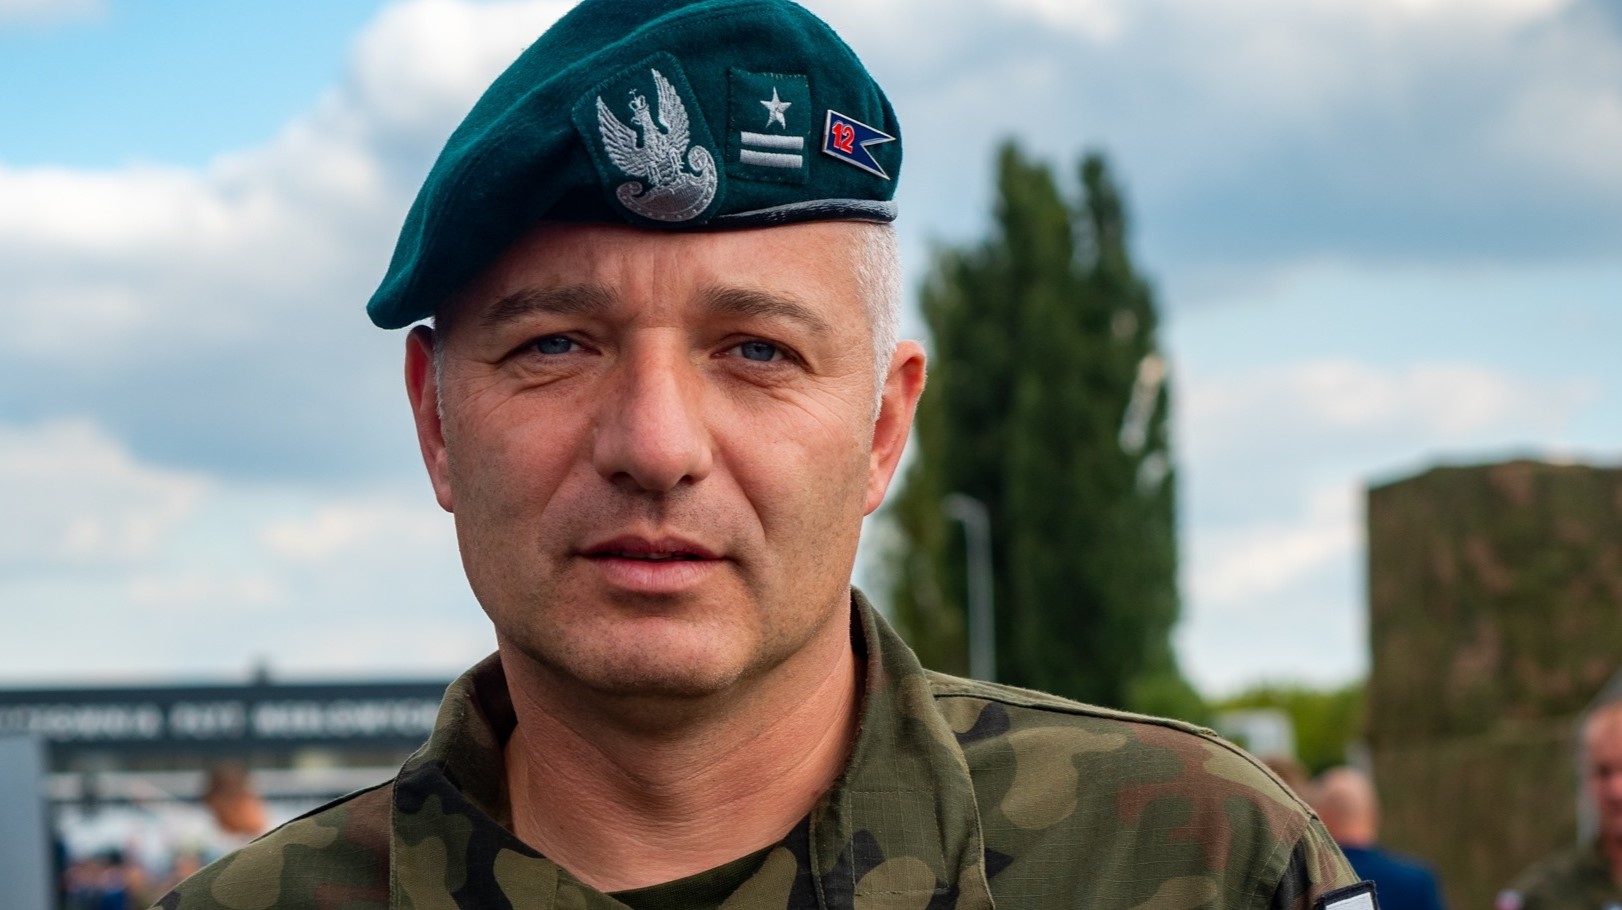 Major Marcel Podhorodecki - Archiwum prywatne